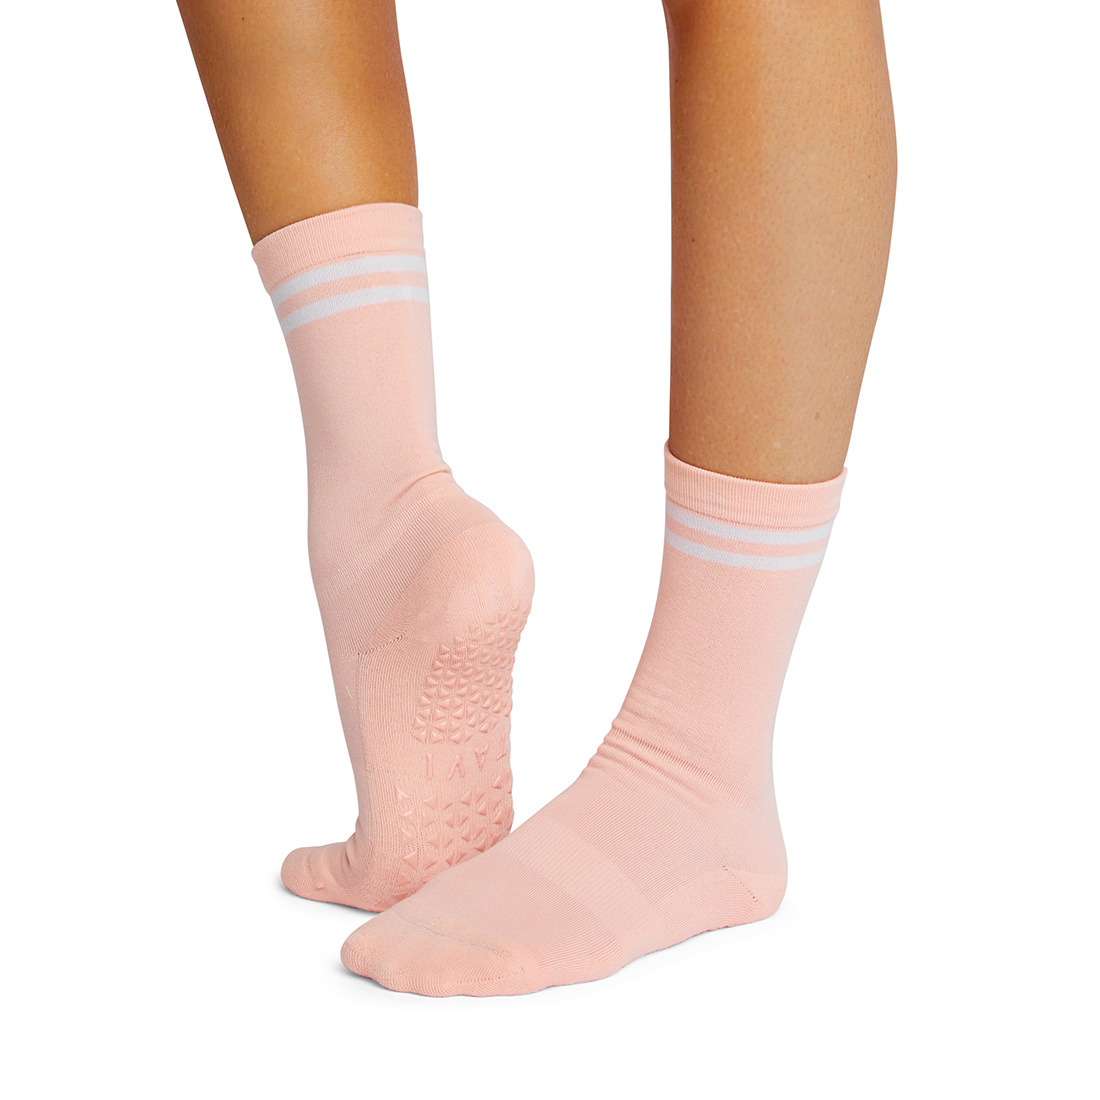 Tavi Grip Socks (closed-toe, randomly selected color/style